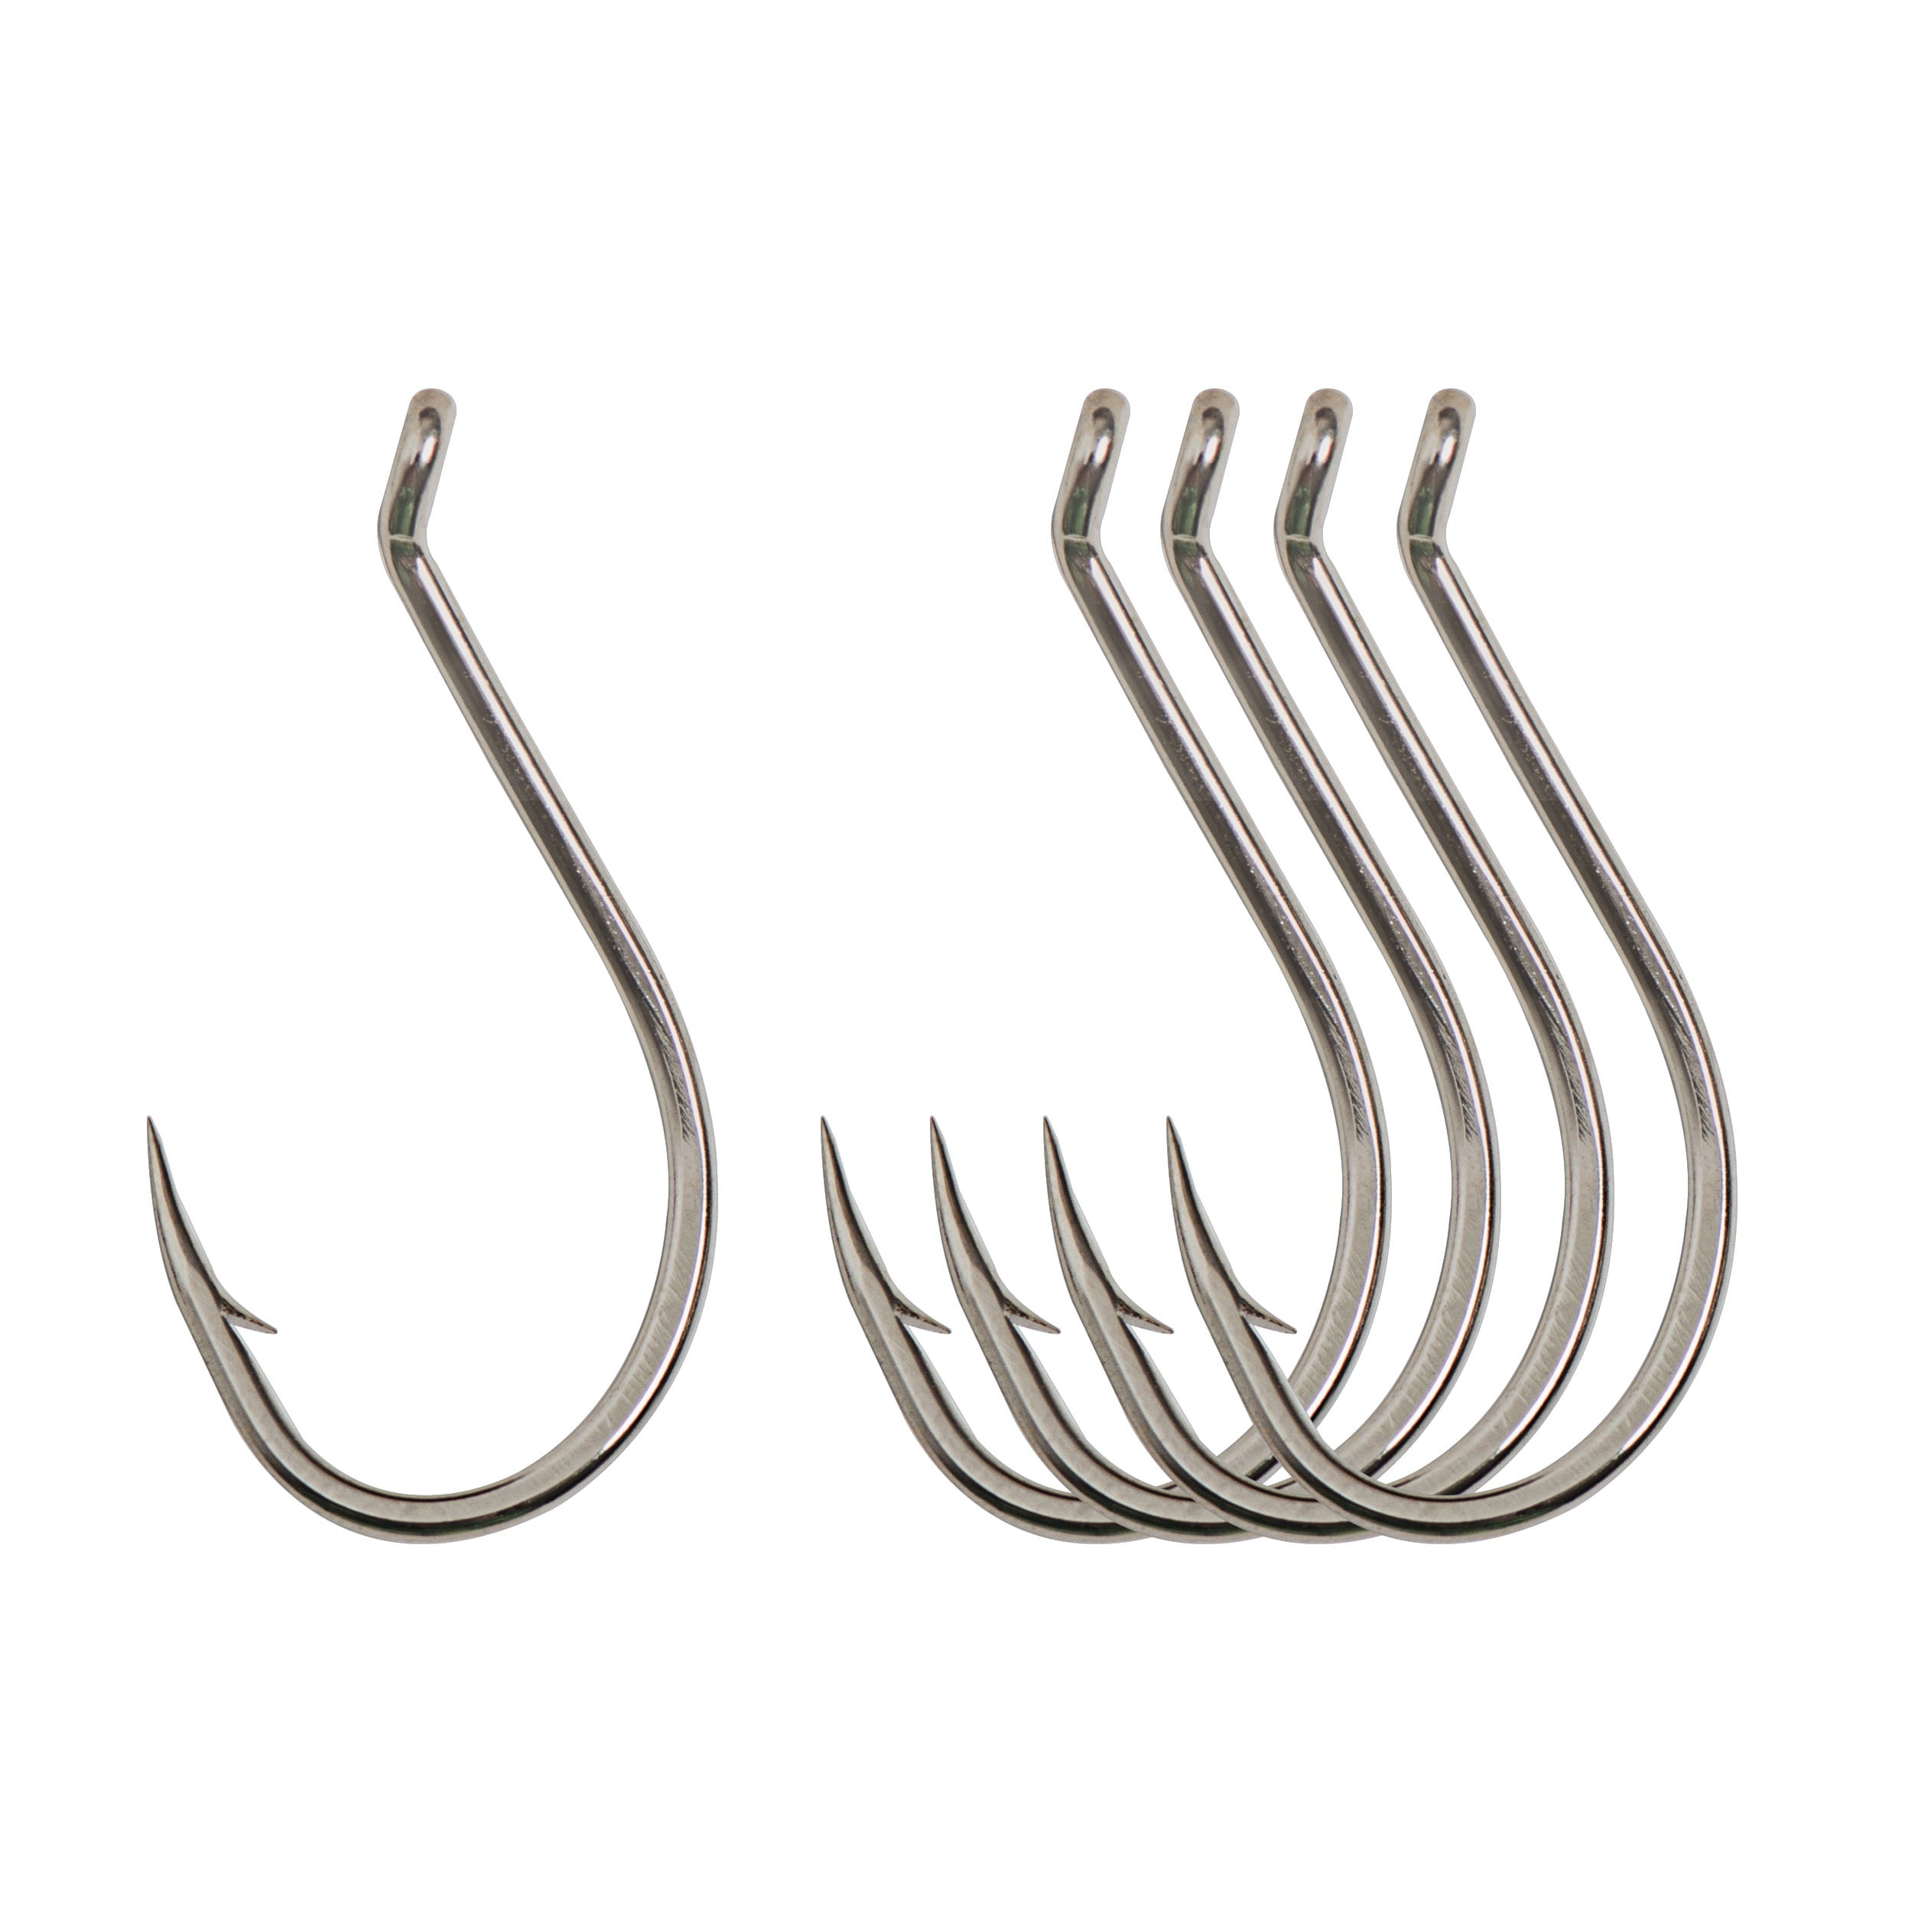 100 Mustad 37160 2X Nickel Kahle Fish Hooks size 2/0 - 100 hooks